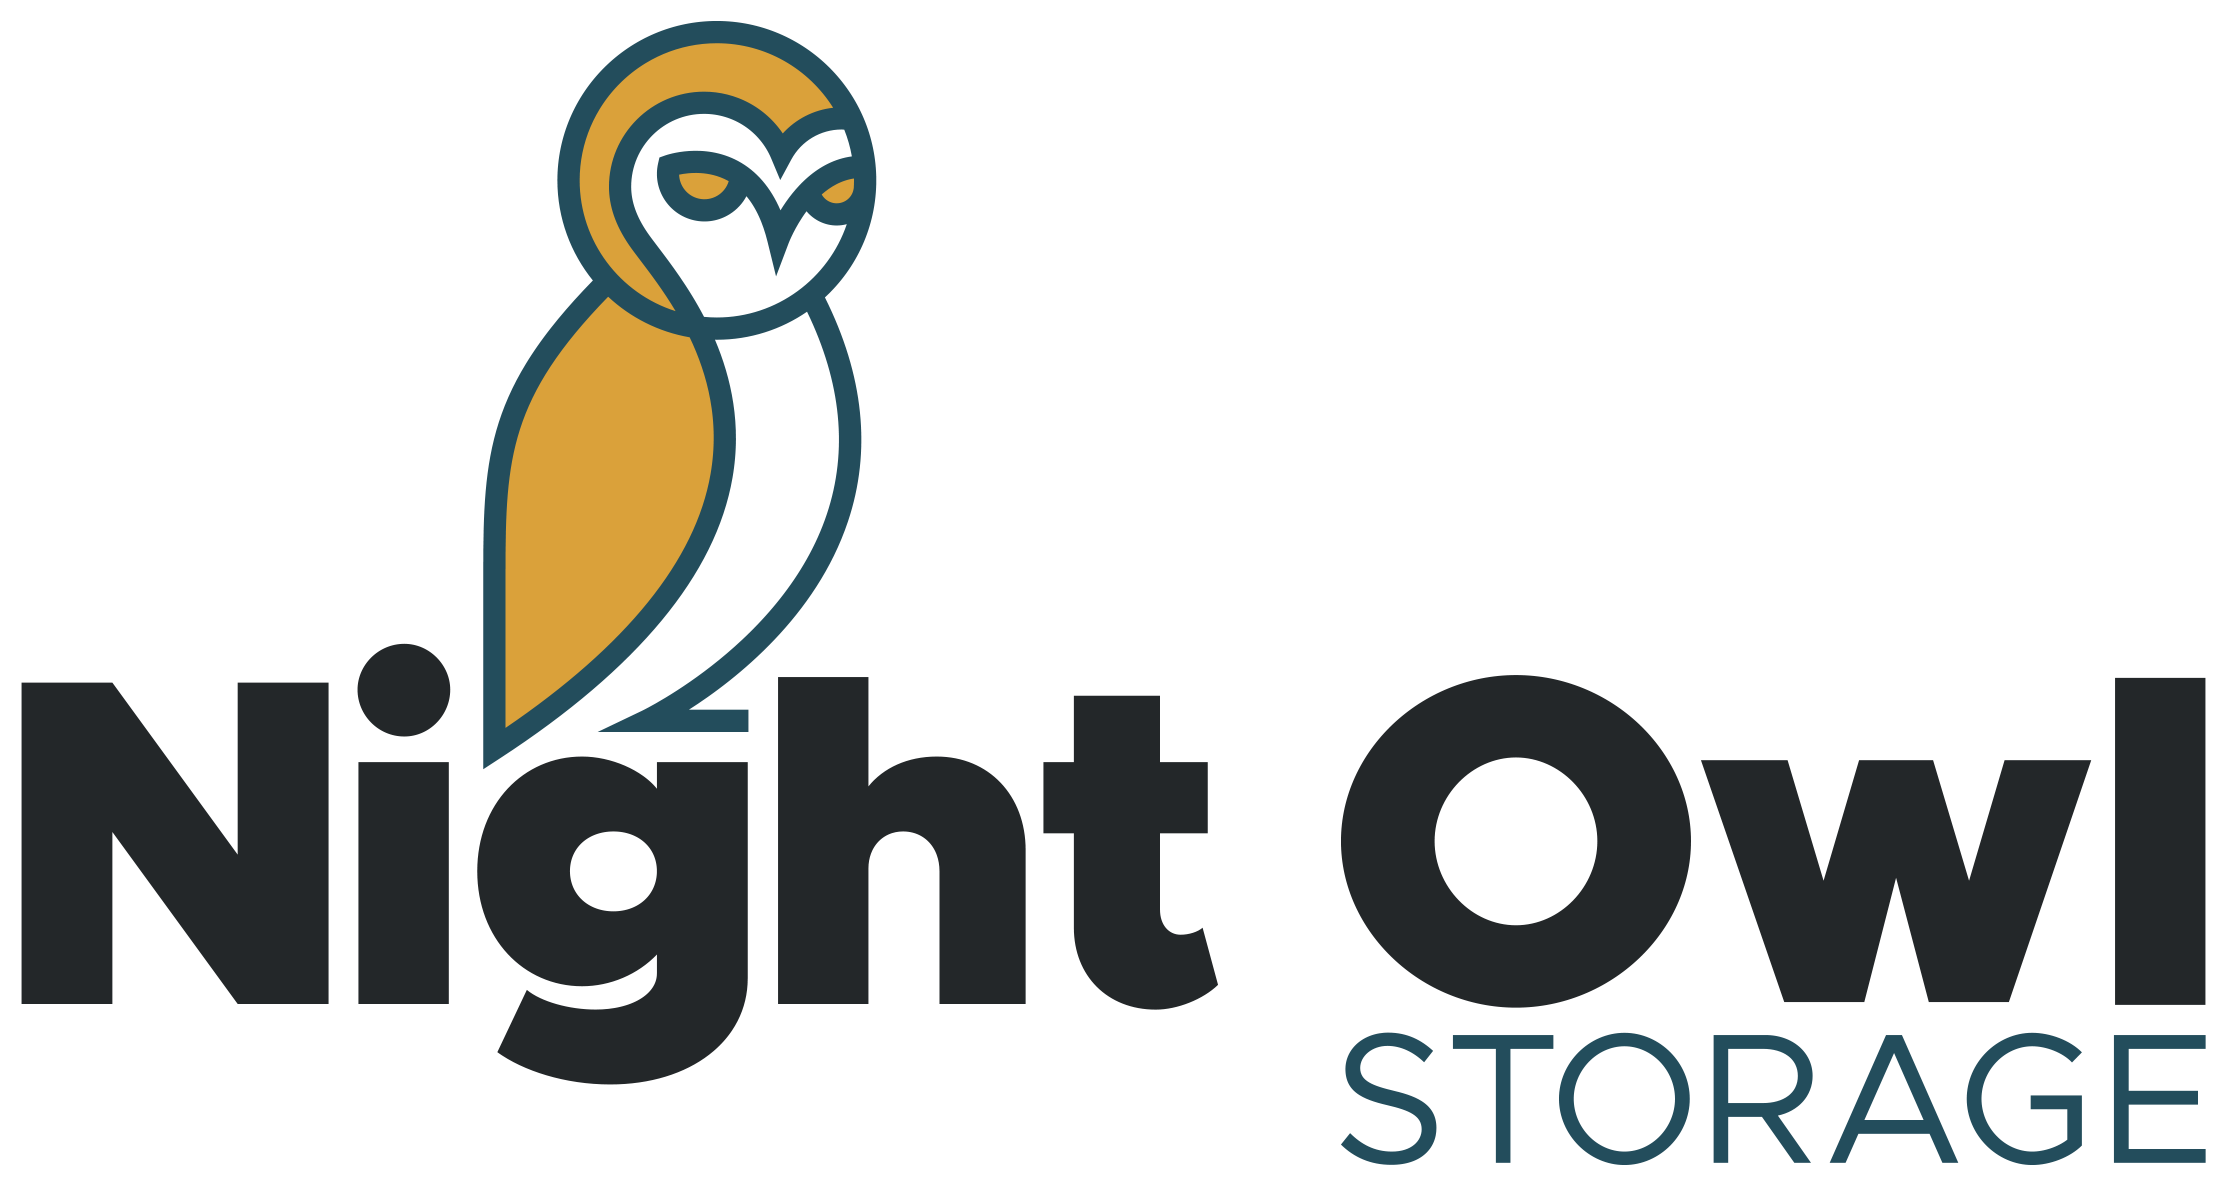 Night Owl Storage